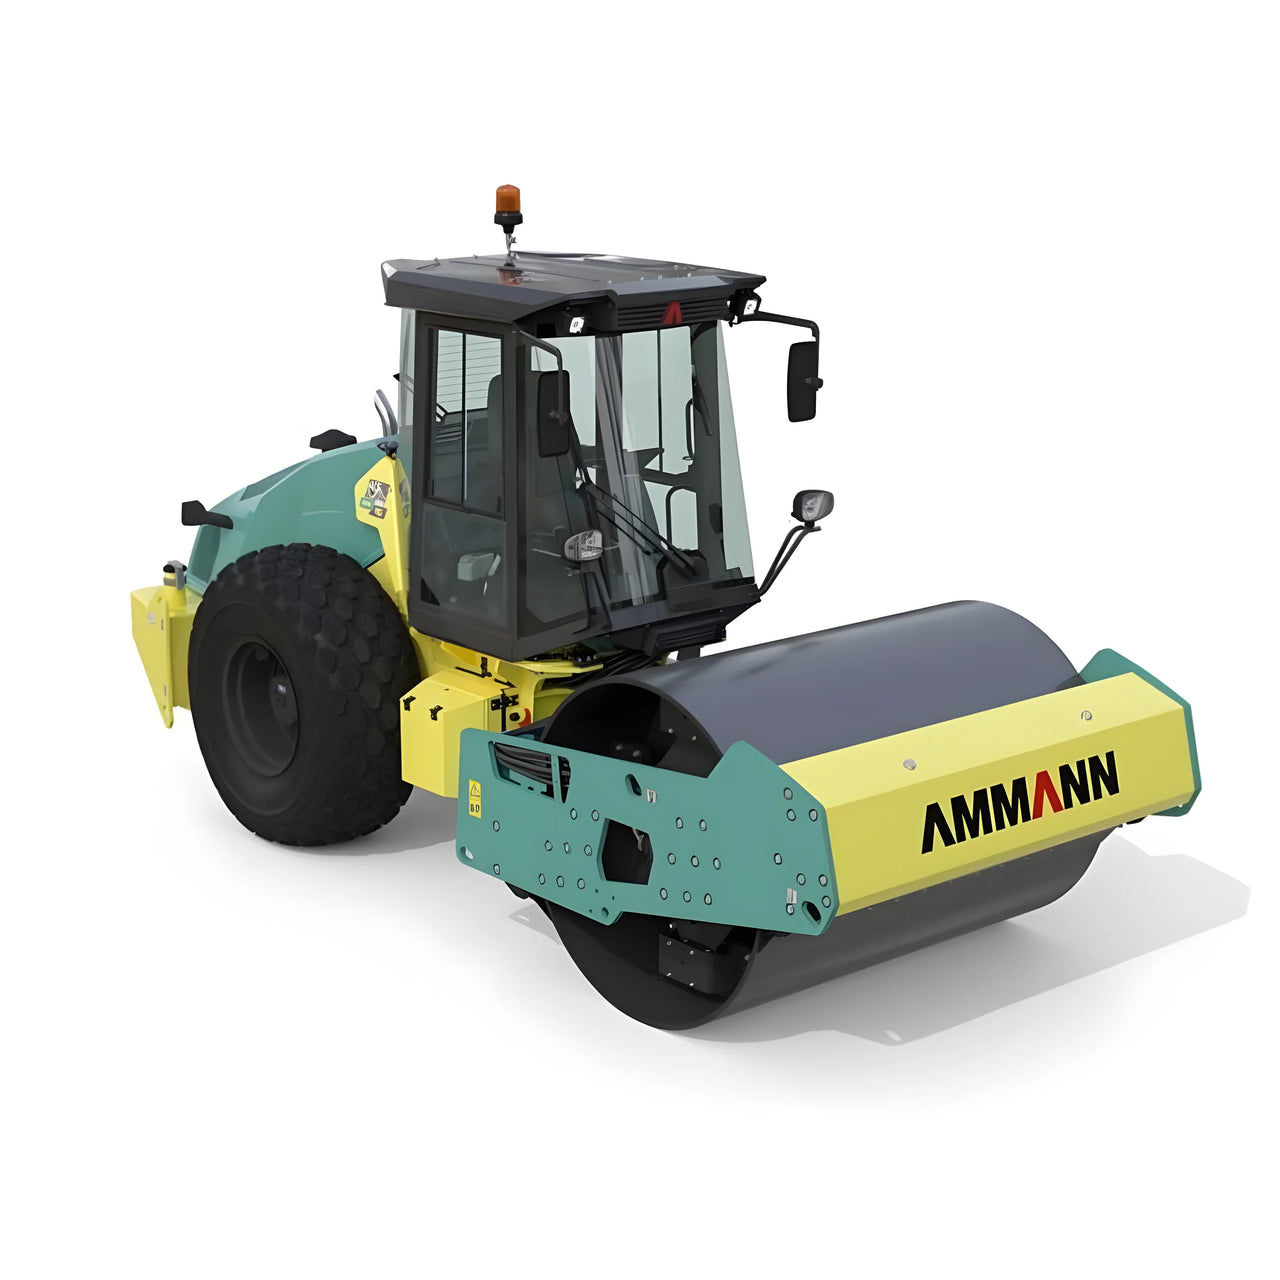 31019 Ammann ARS110 Compactor Roller Scale 1:50